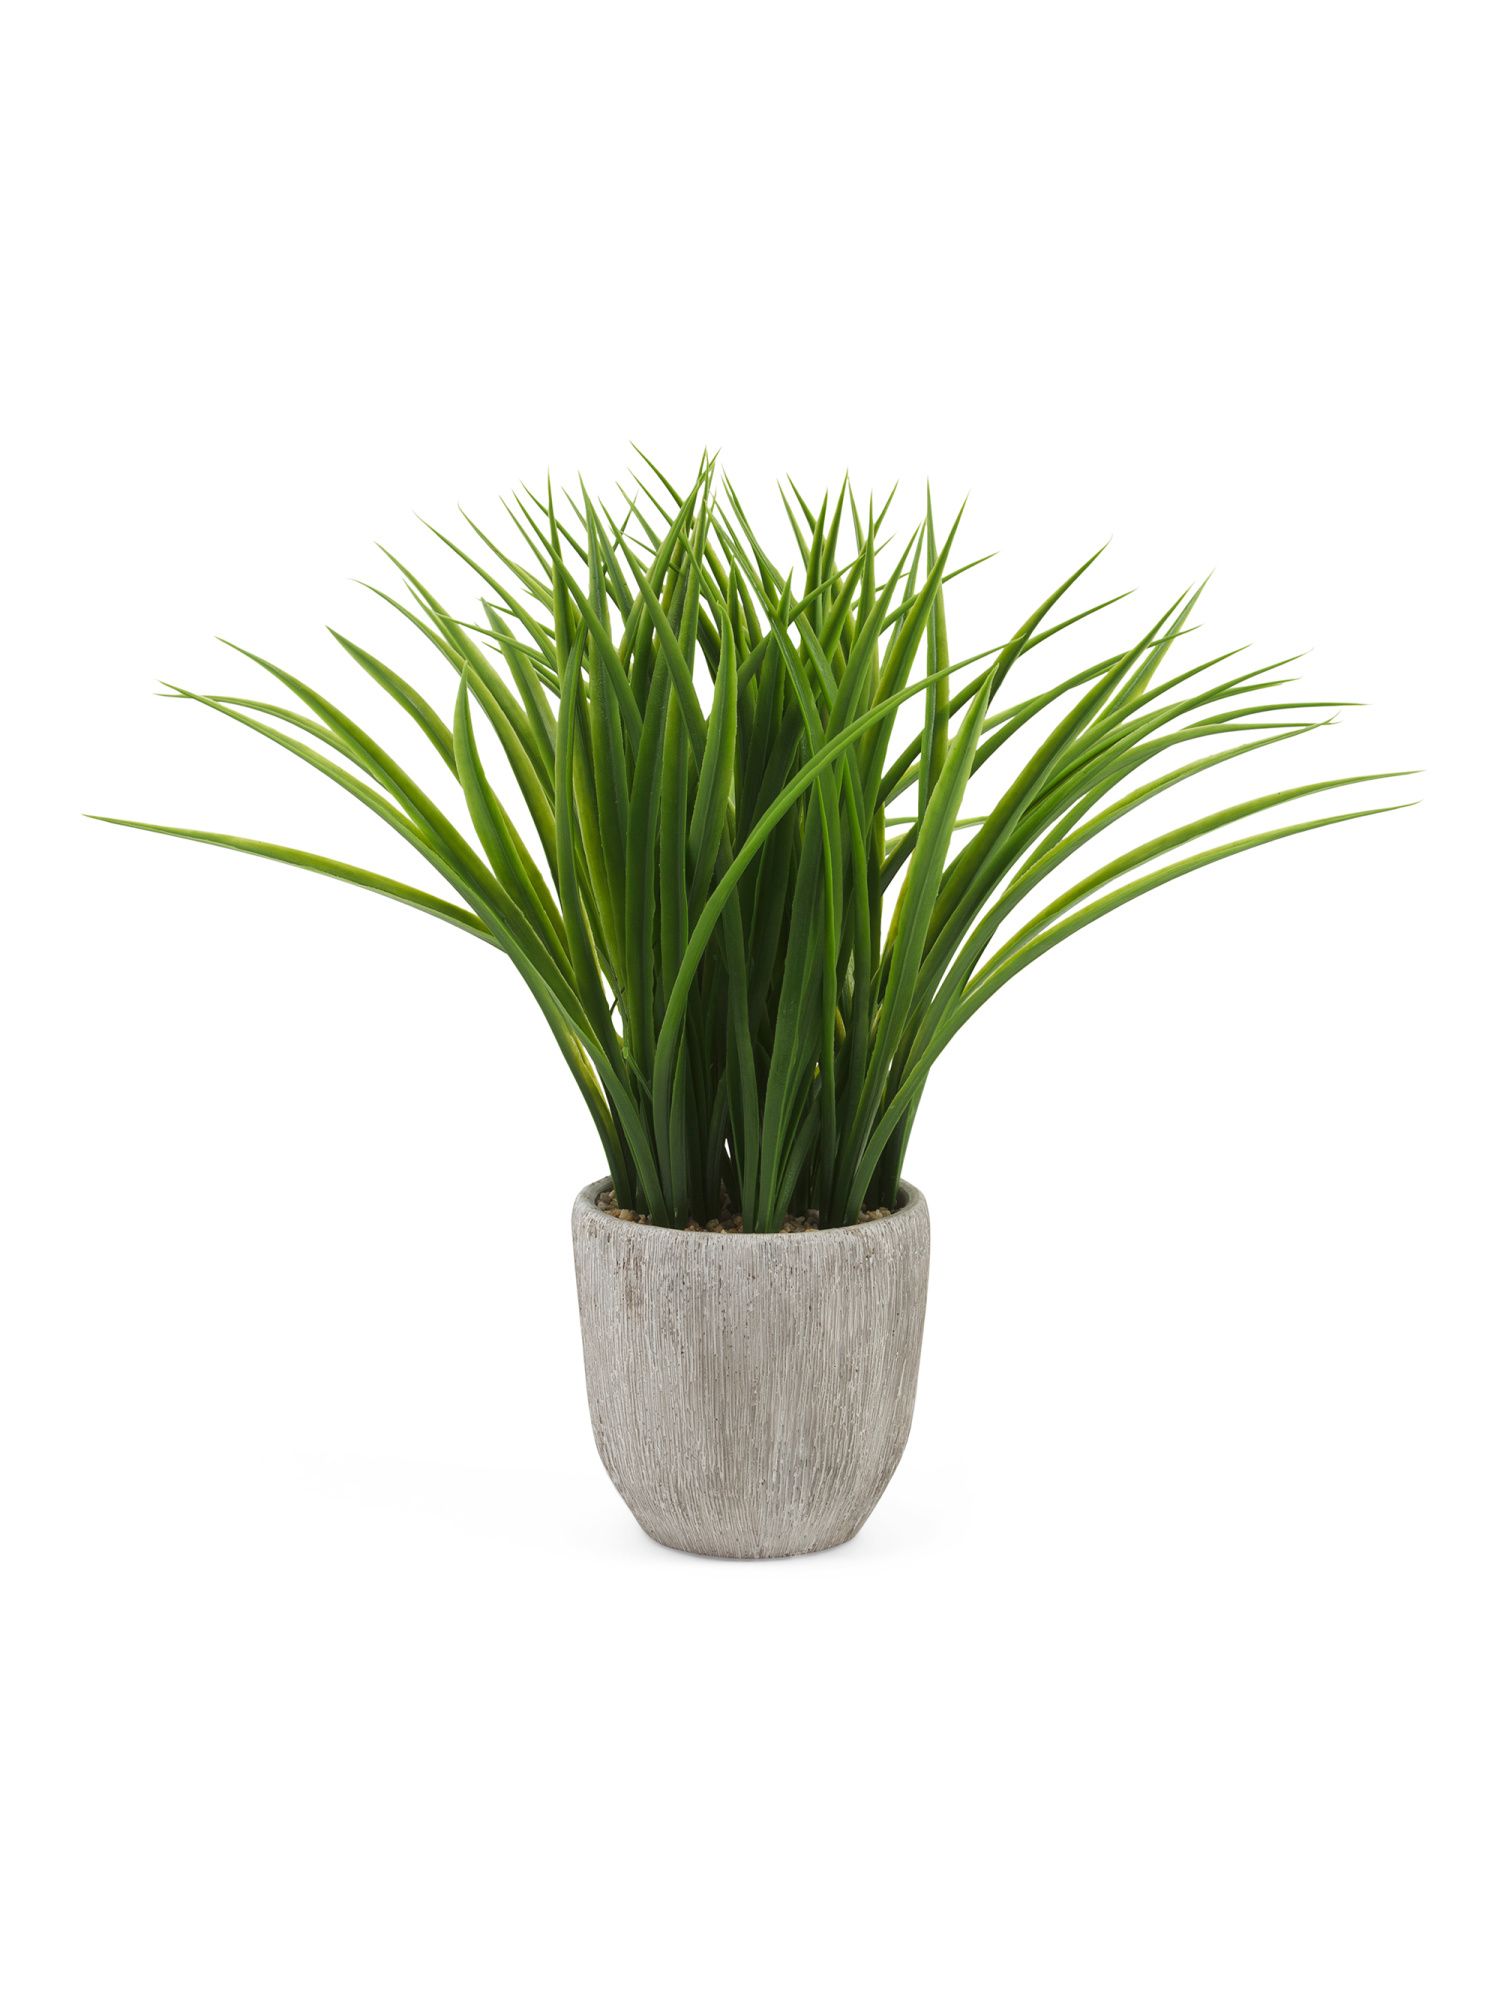 Grass In Vertical Grain Pot | Plants & Planters | Marshalls | Marshalls